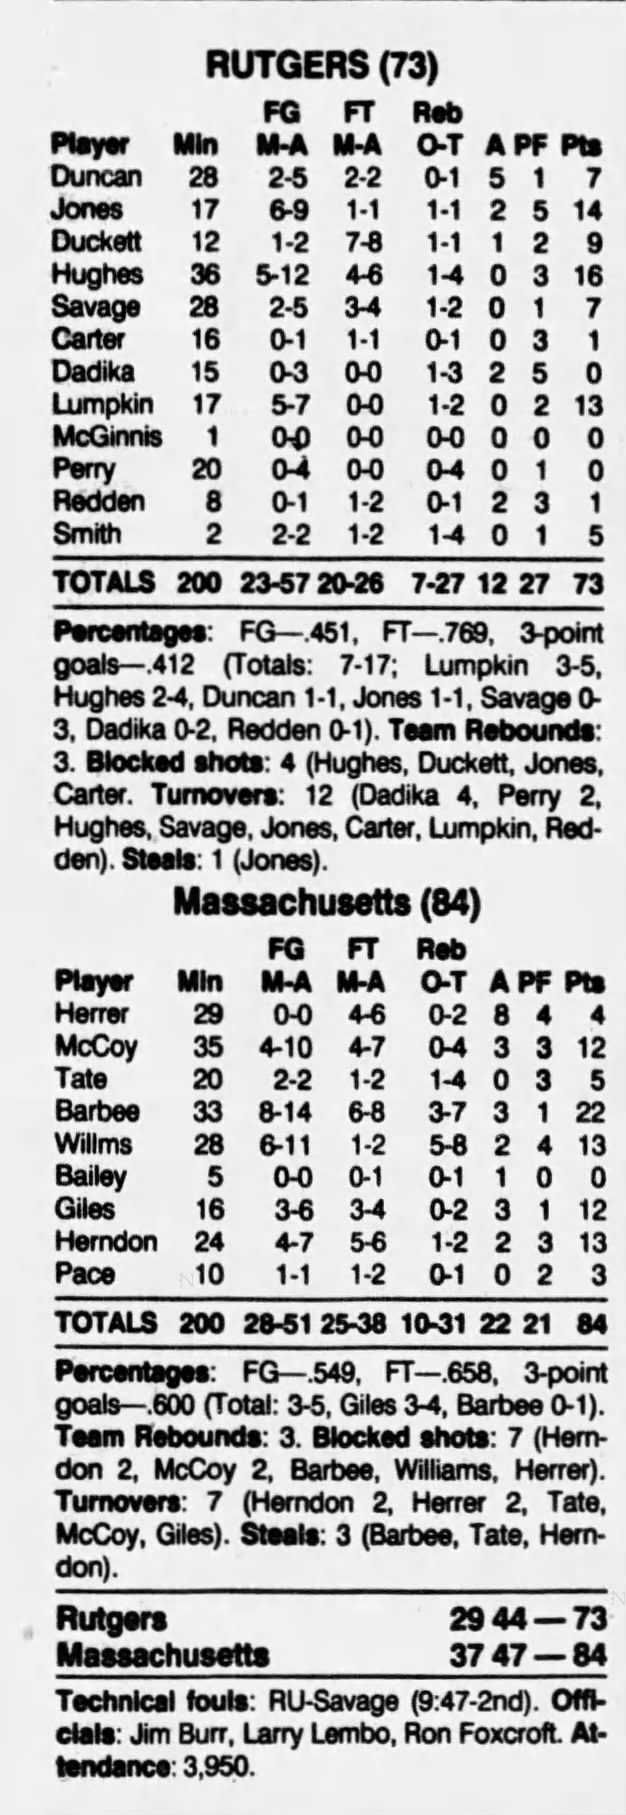 Rutgers at Massachusetts, January 4, 1990 (Chris Bailey 1 assist)